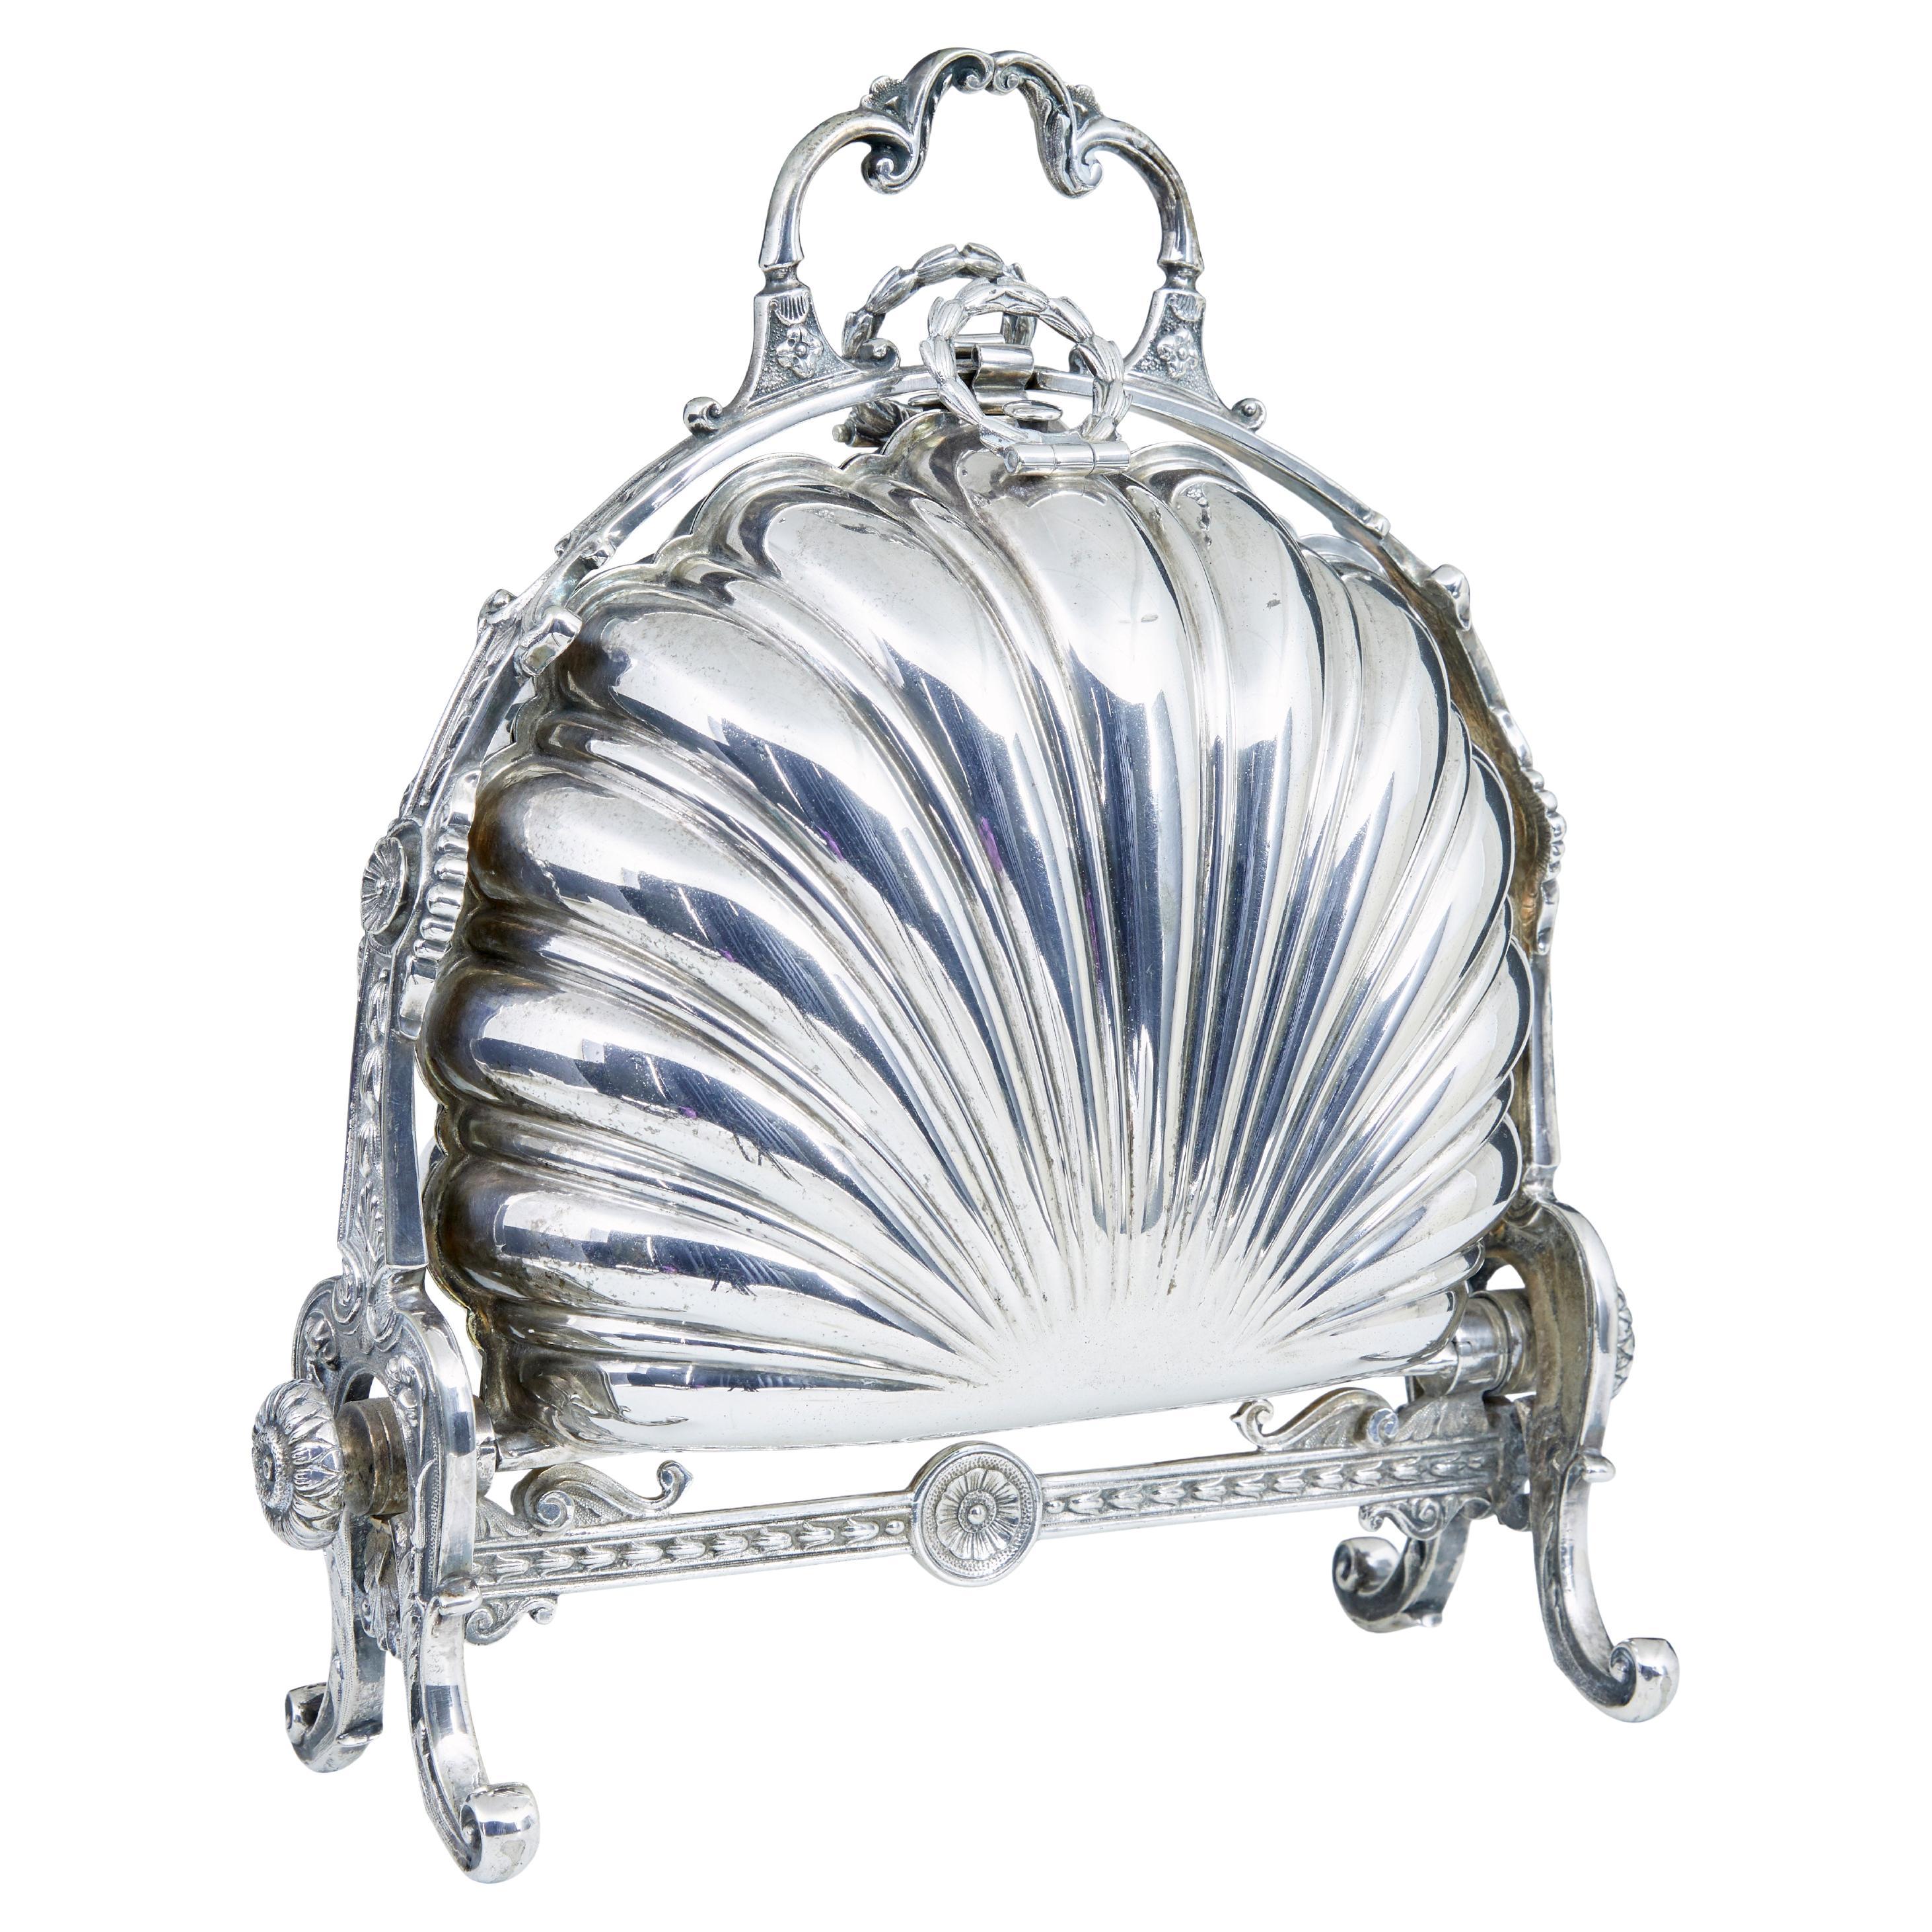 19th Century silver plated decorative bun warmer For Sale